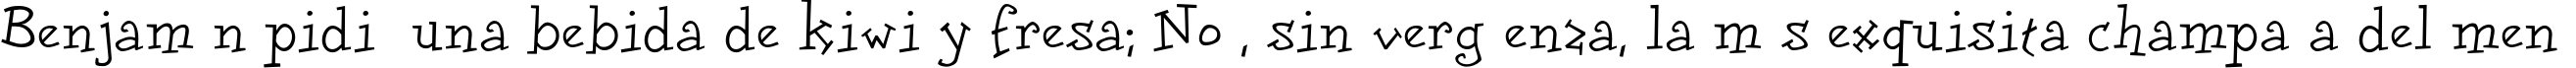 Пример написания шрифтом DoloresCyr текста на испанском